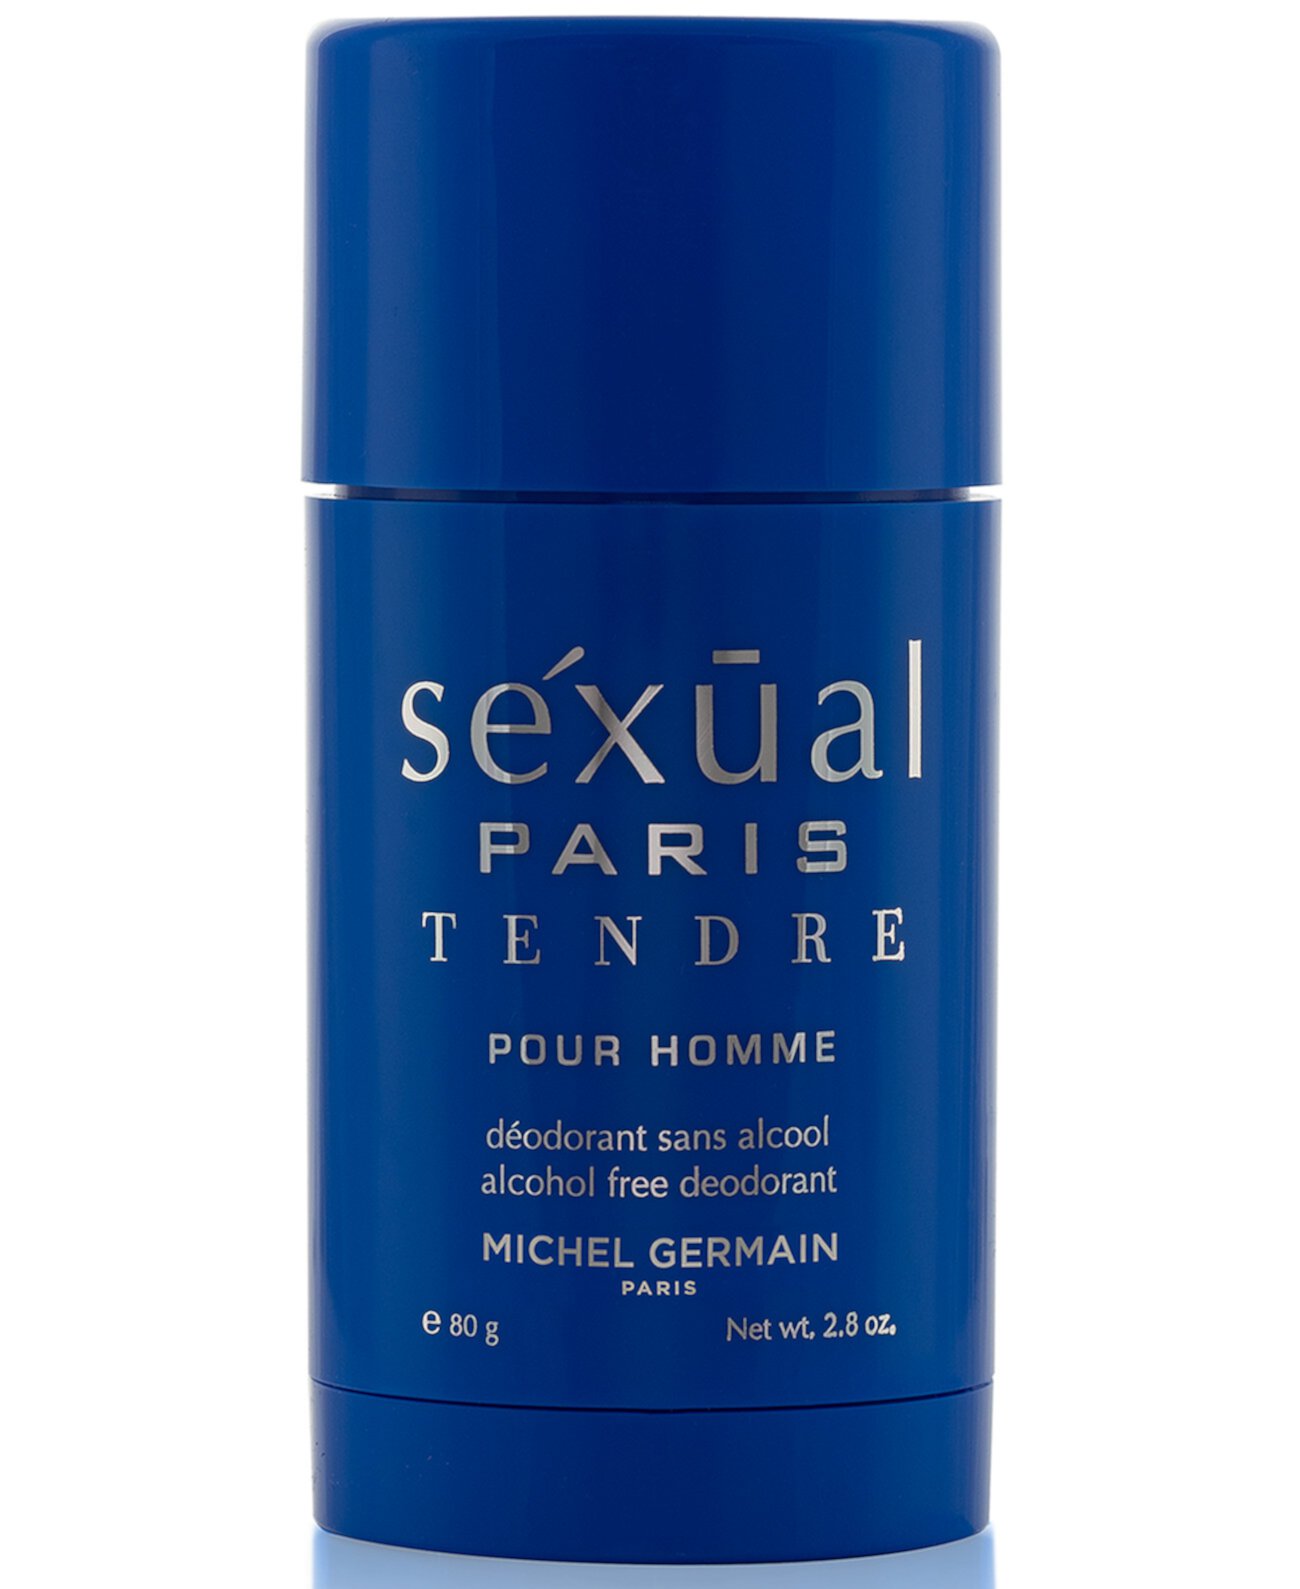 Мужской дезодорант Séxual Paris Tendre, 2,8 унции. Michel Germain